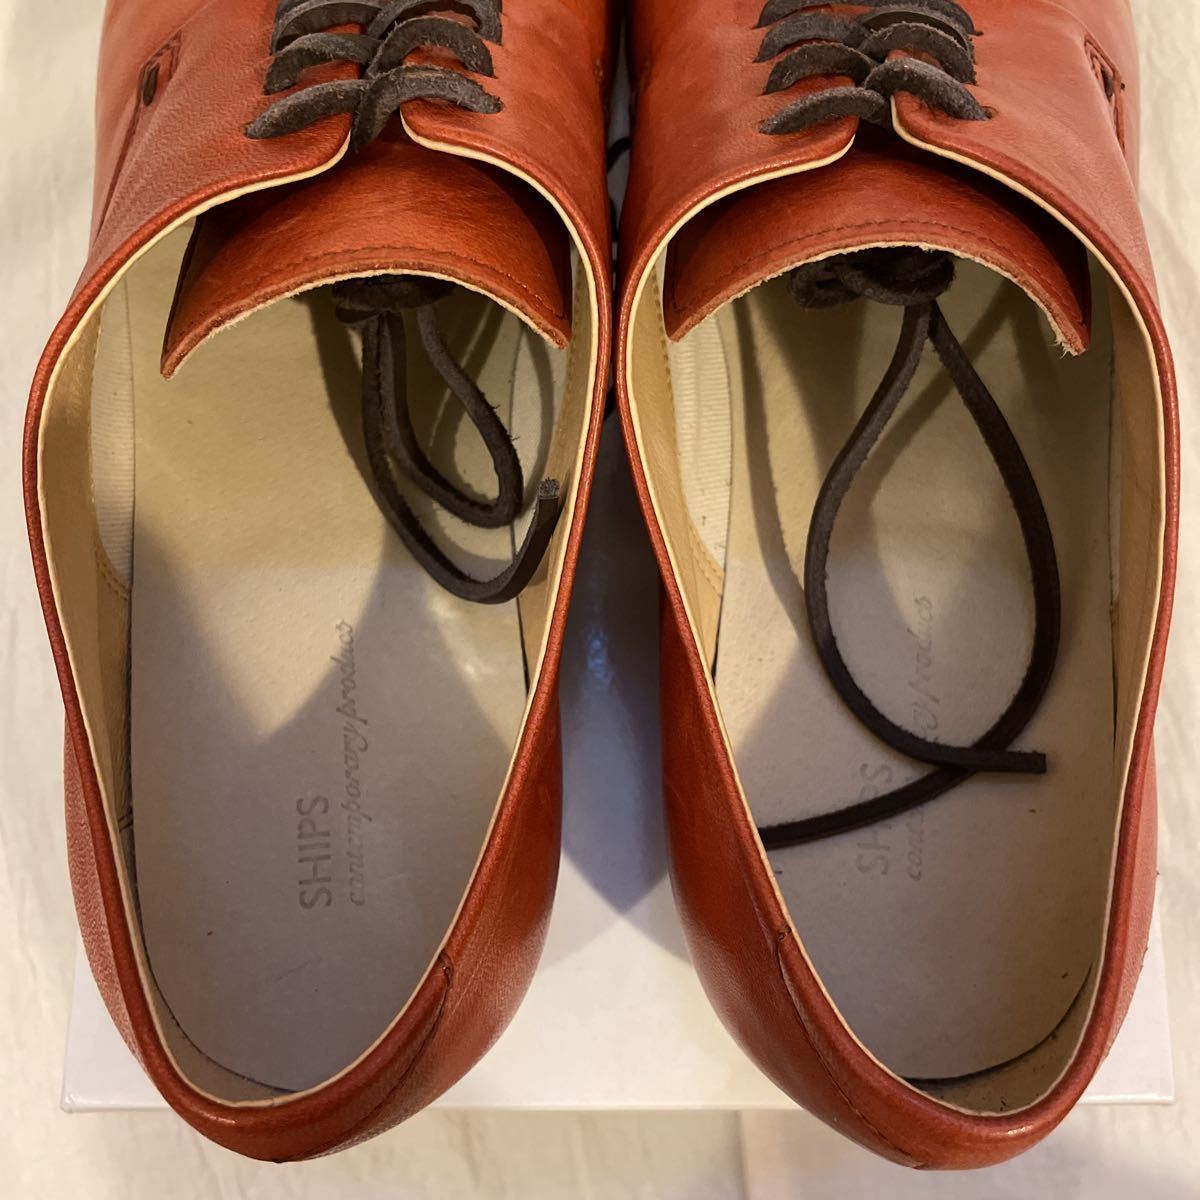 SHIPS Ships SC hose leather plain tu leather shoes 28.0cm Brown sale commodity men's 